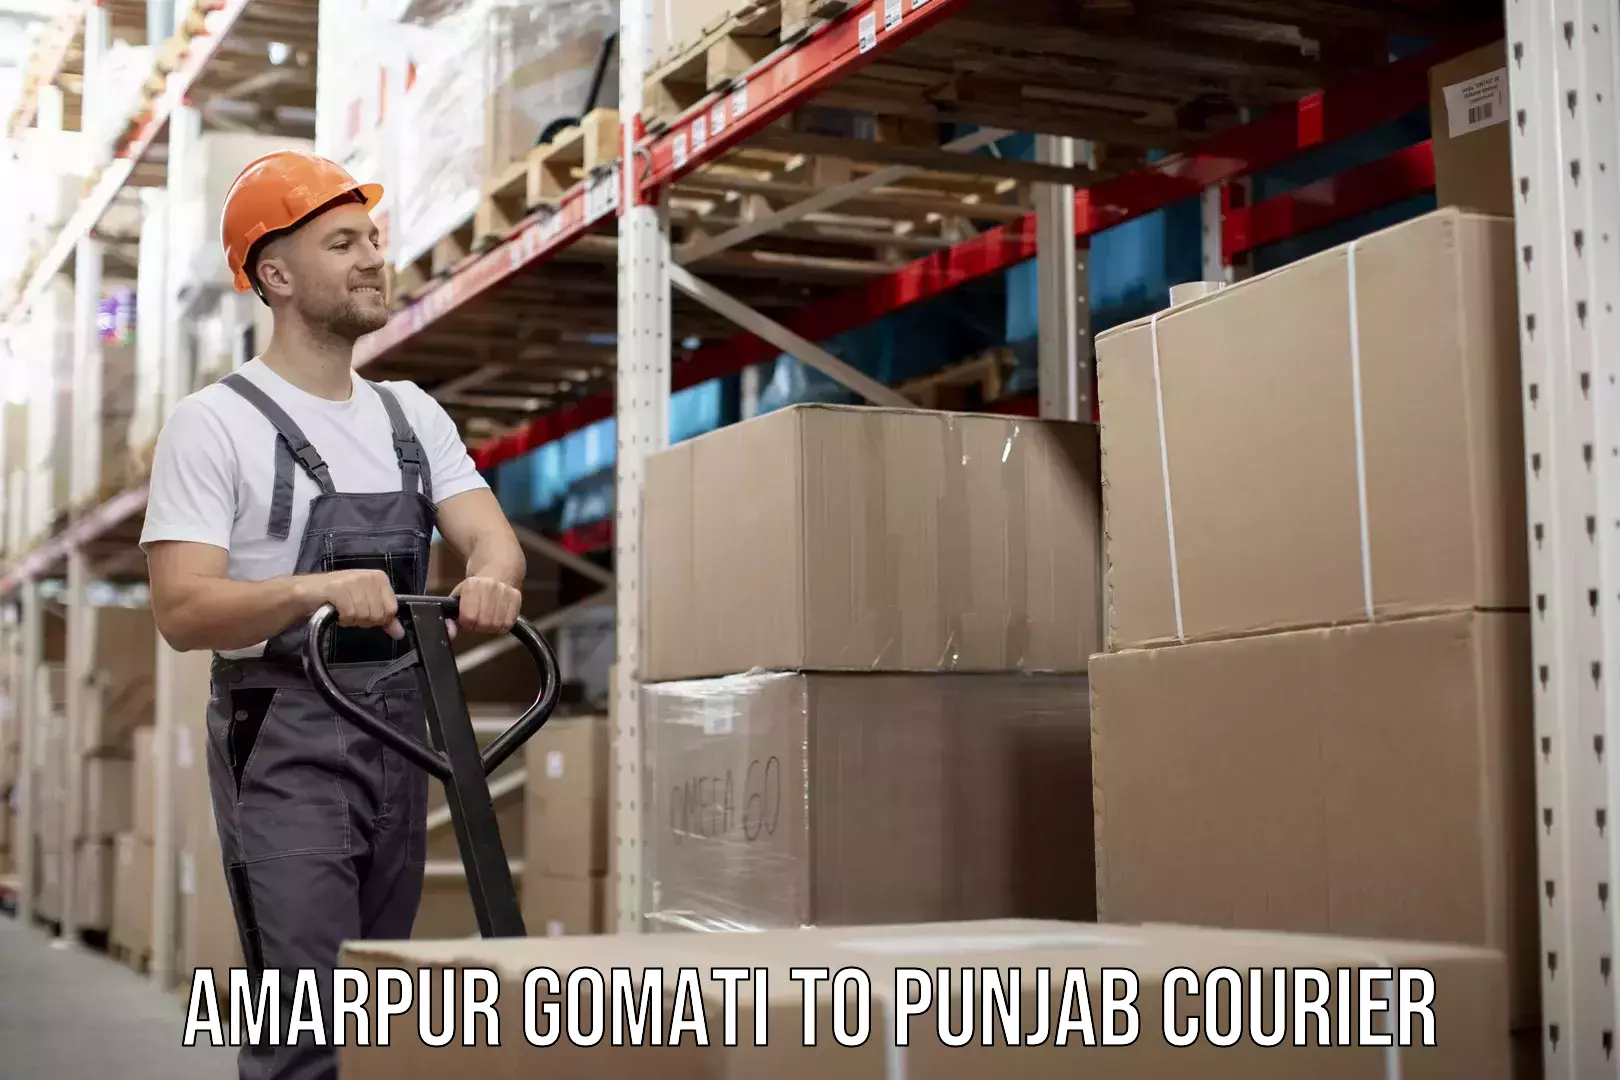 Courier service comparison Amarpur Gomati to Punjab